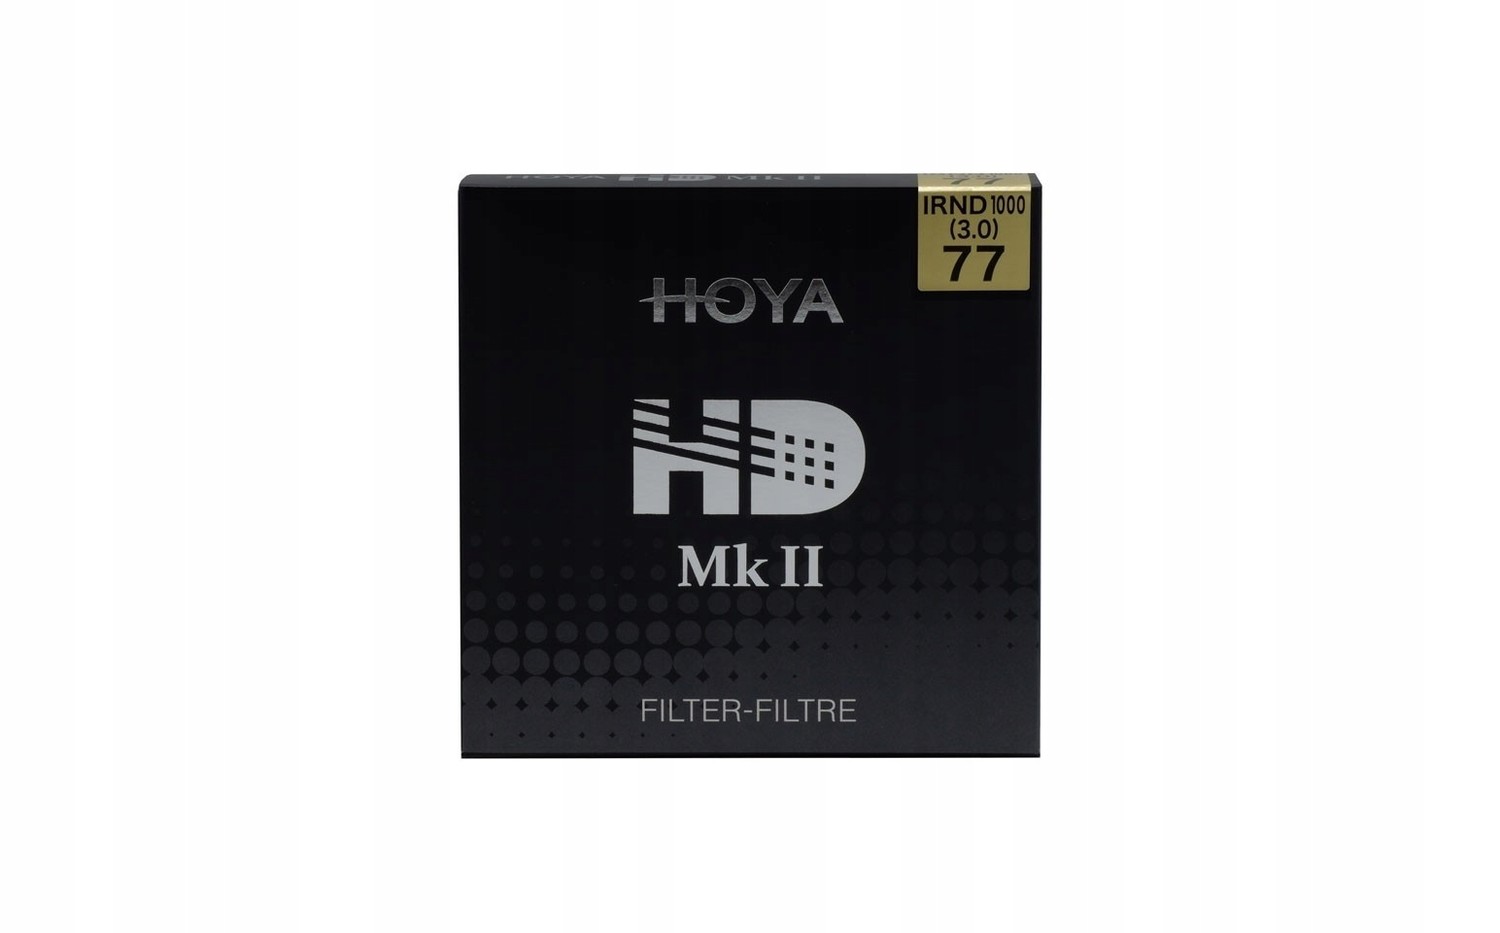 Filtr Hoya Hd MkII IRND1000 (3.0) 58mm